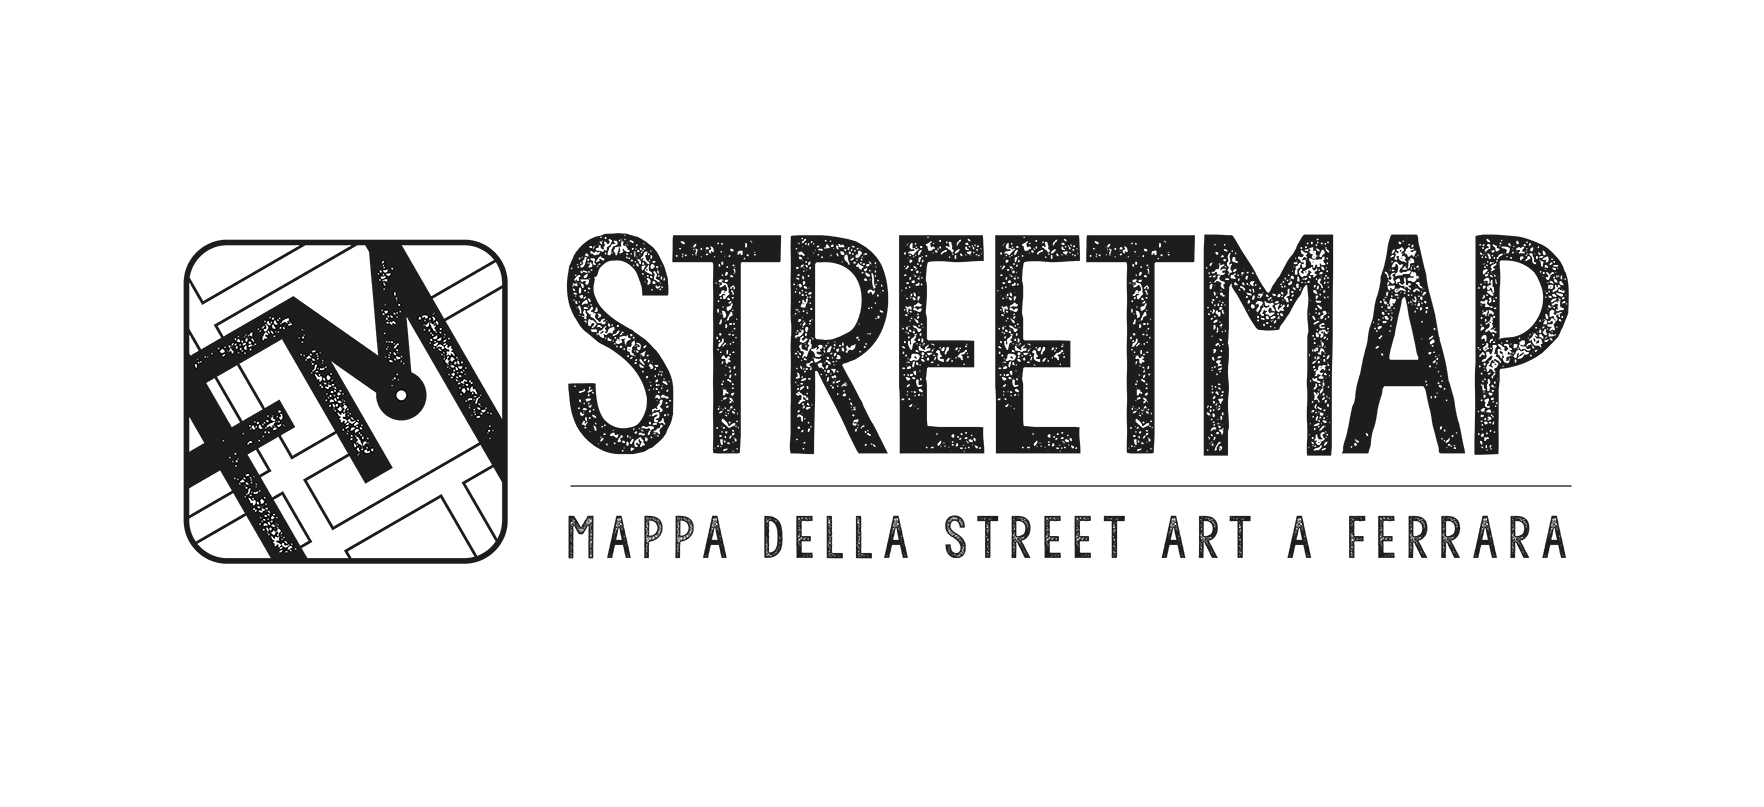 Featured image for “FM Ferrara StreetMap”